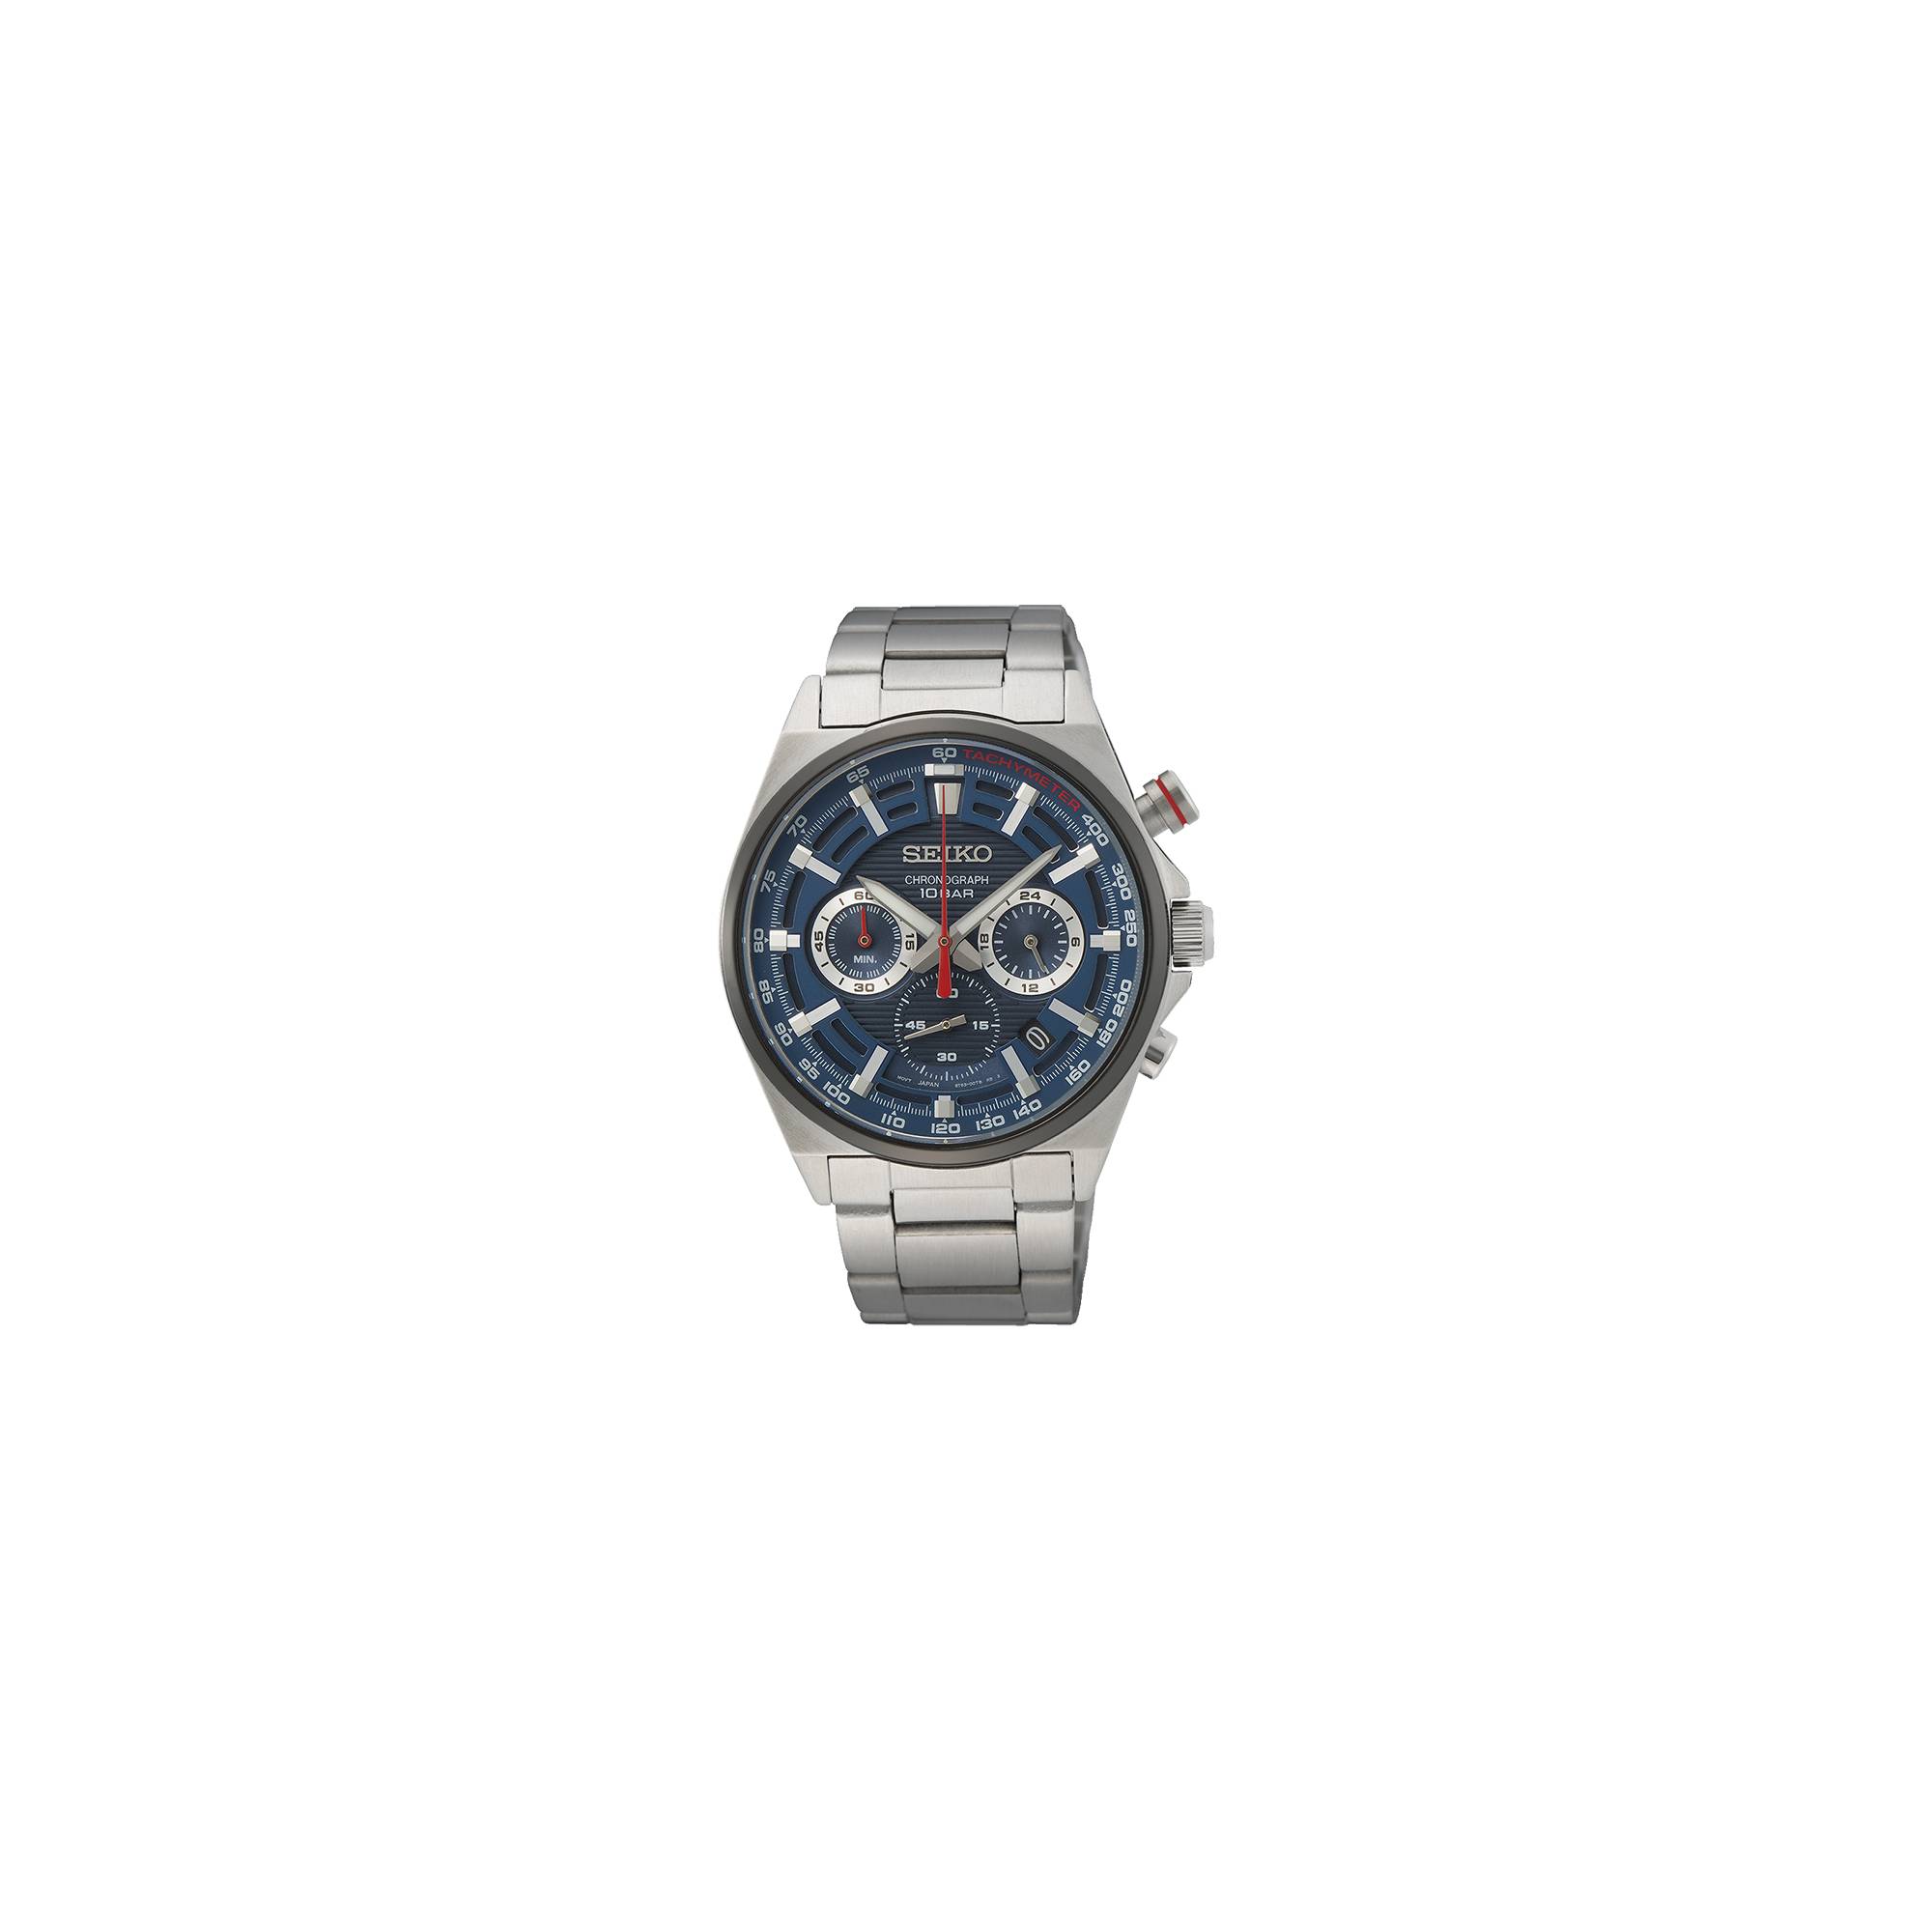 SPORT Men's watch with quartz chronograph in steel SSB407P1